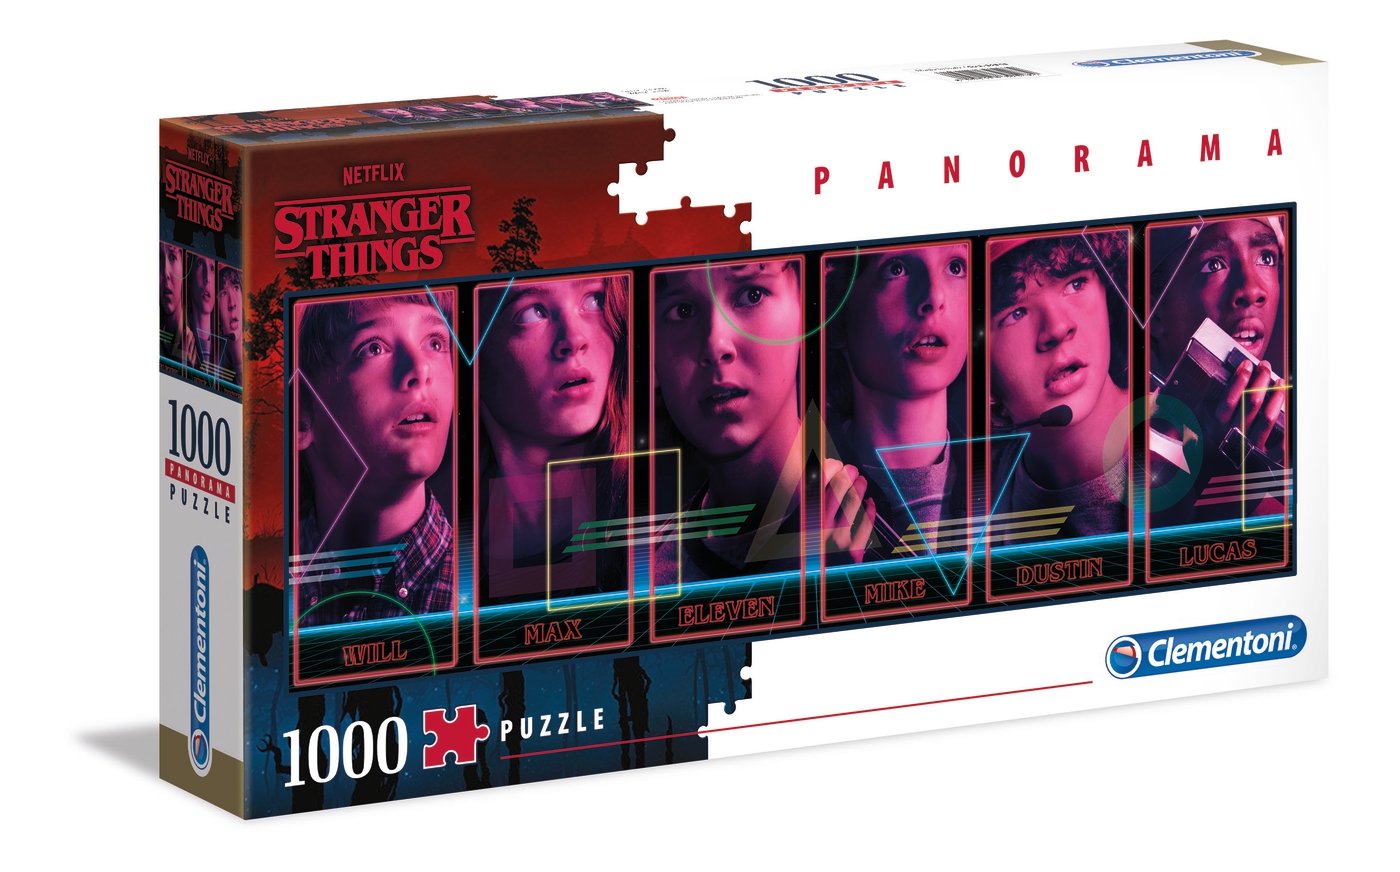 Puzzle 1000 piezas -Panorama: Stranger Things- Clementoni